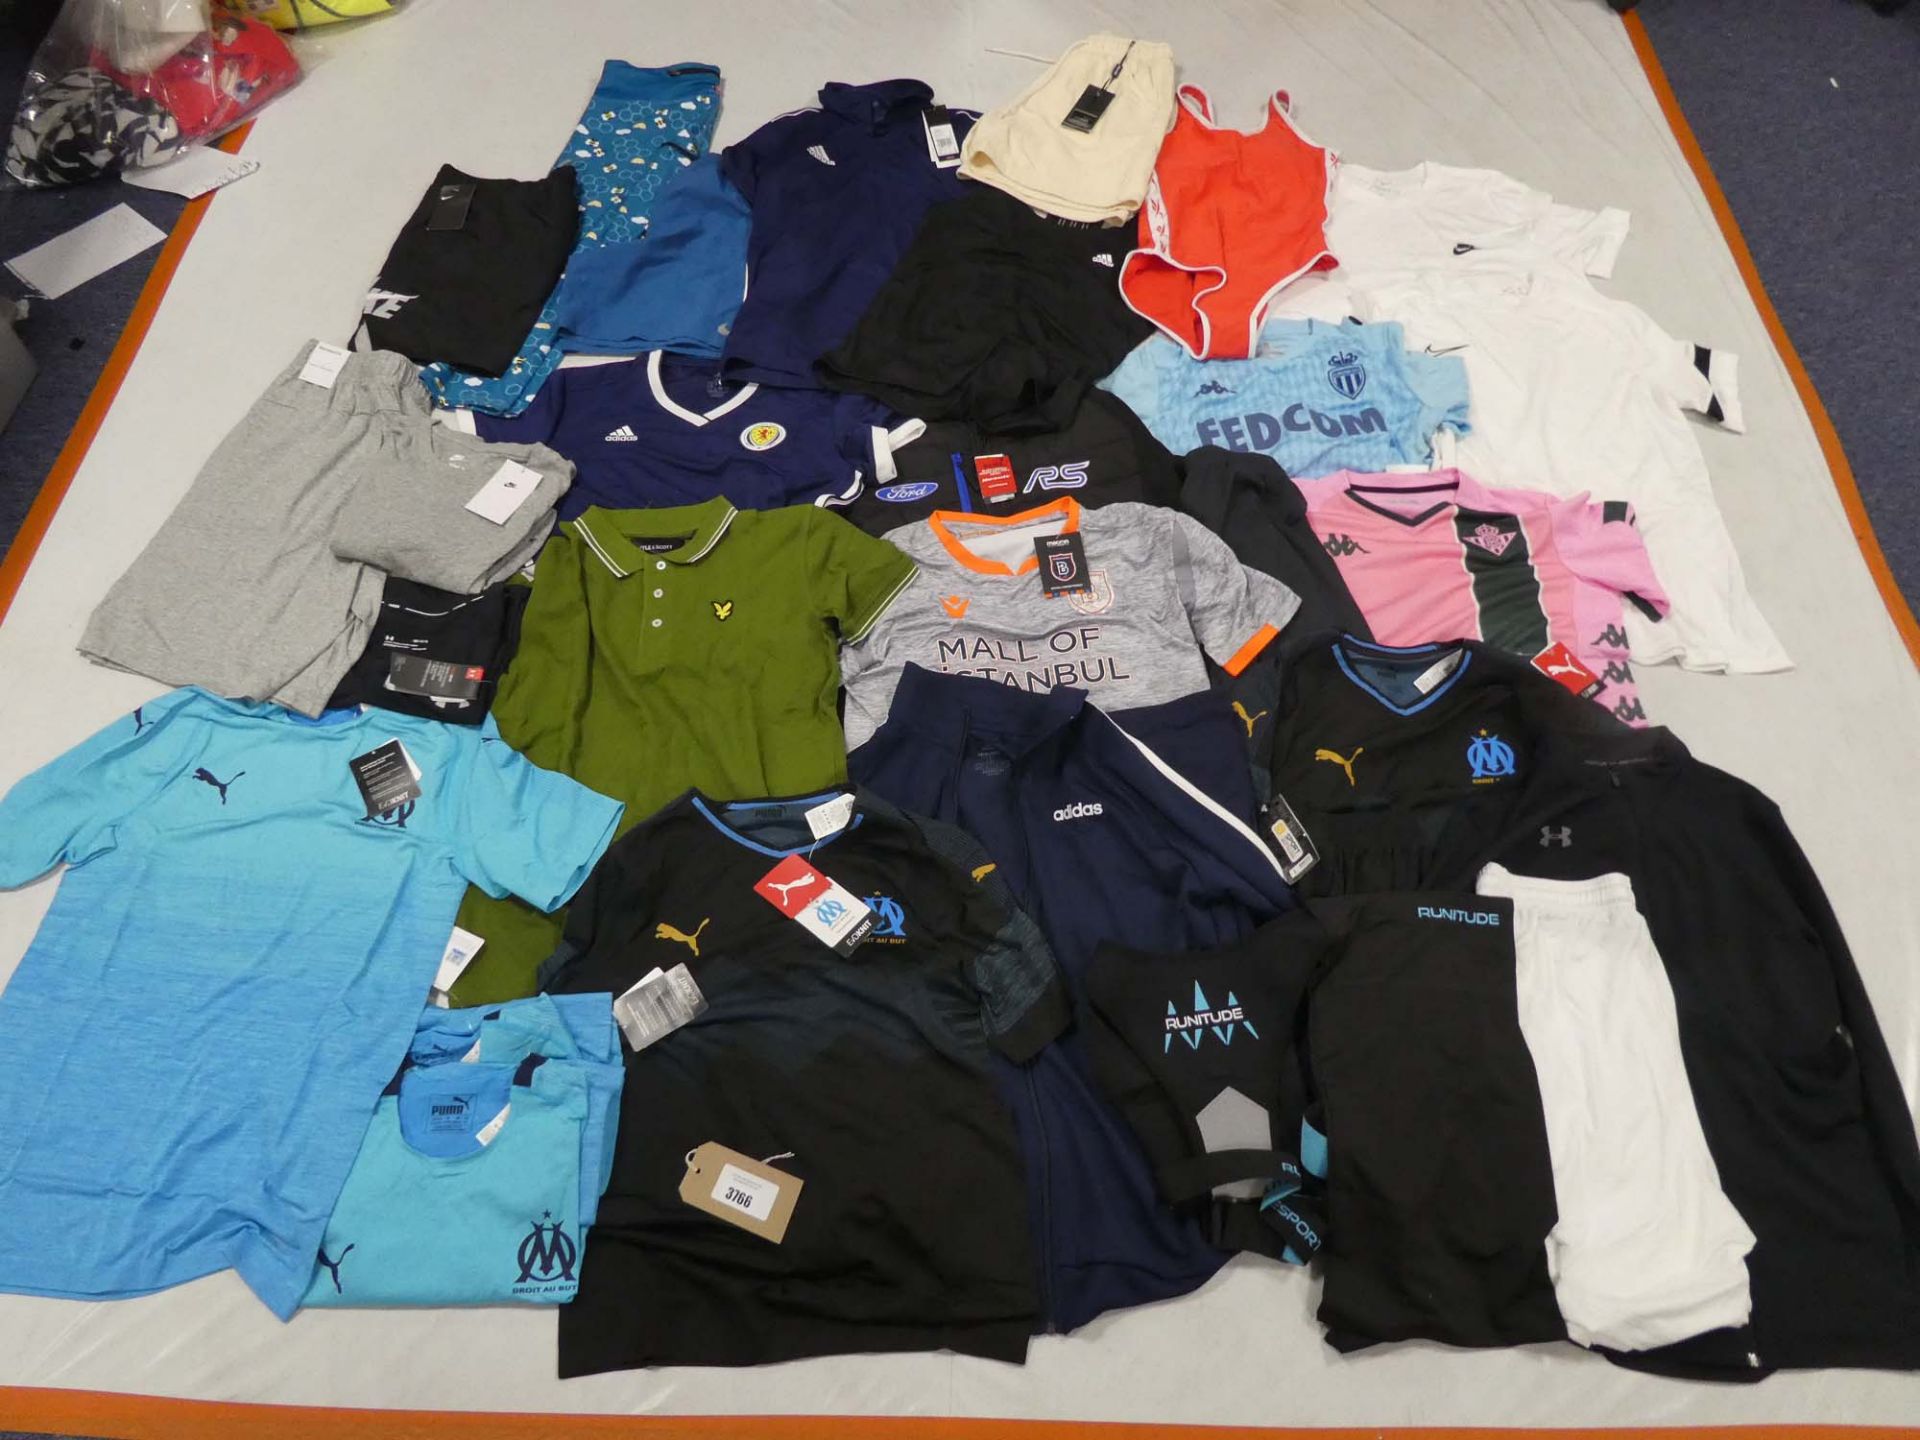 Selection of sportswear to include Adidas, Nike, Puma, etc